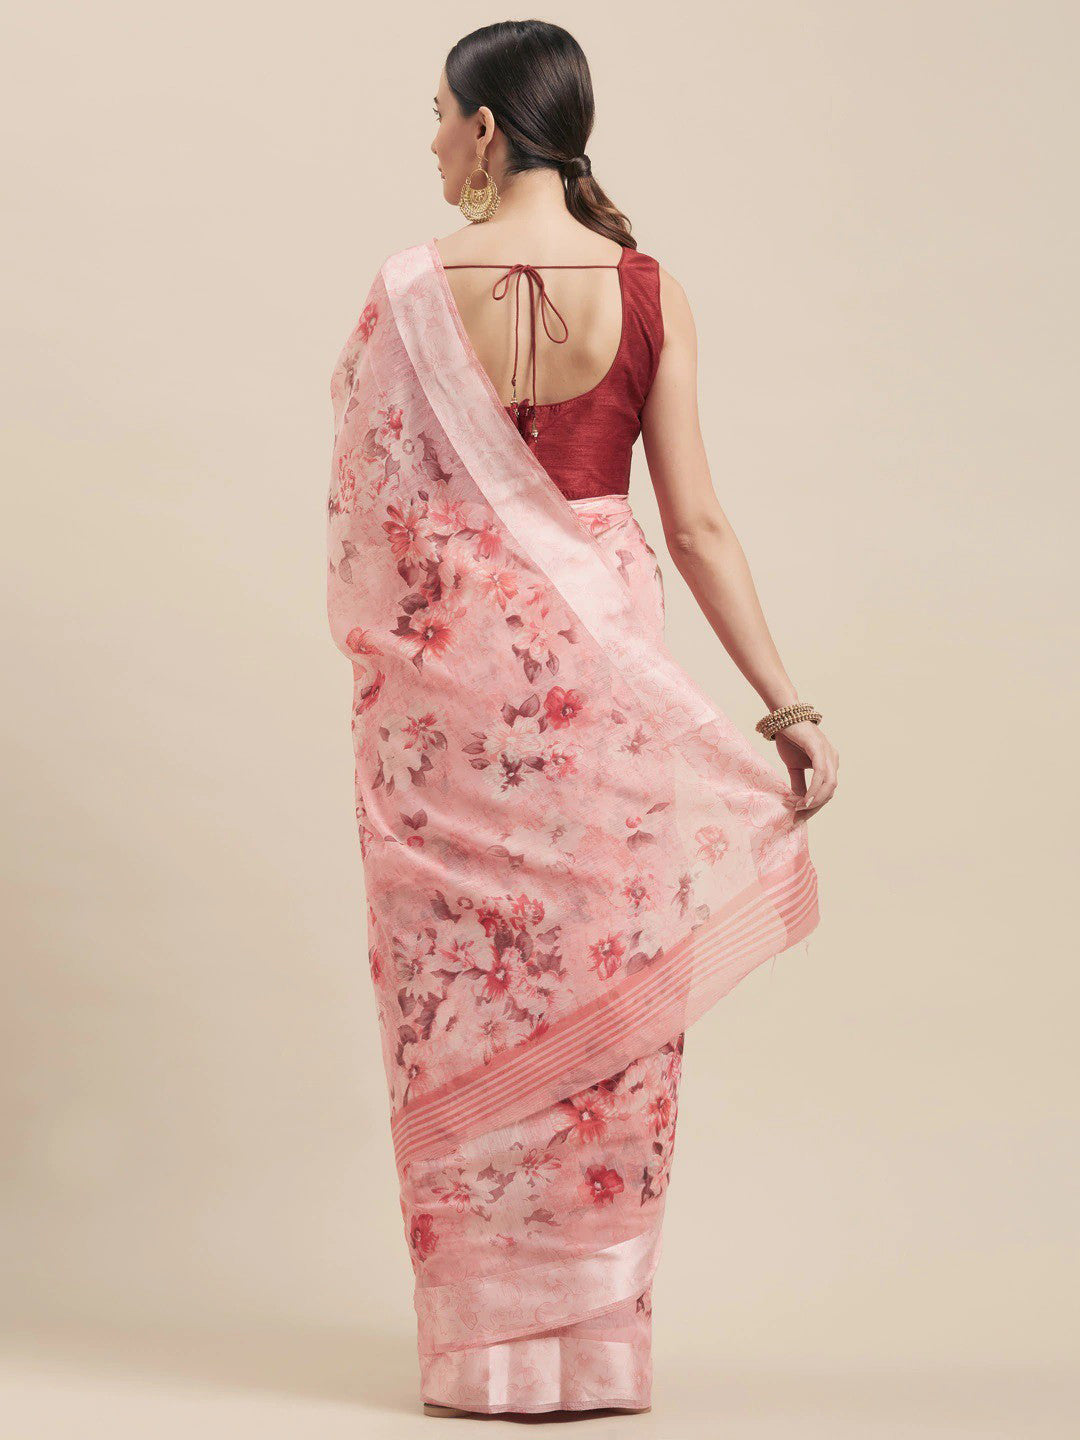 Women's Pink Cotton Blend Printed Saree - Ahika